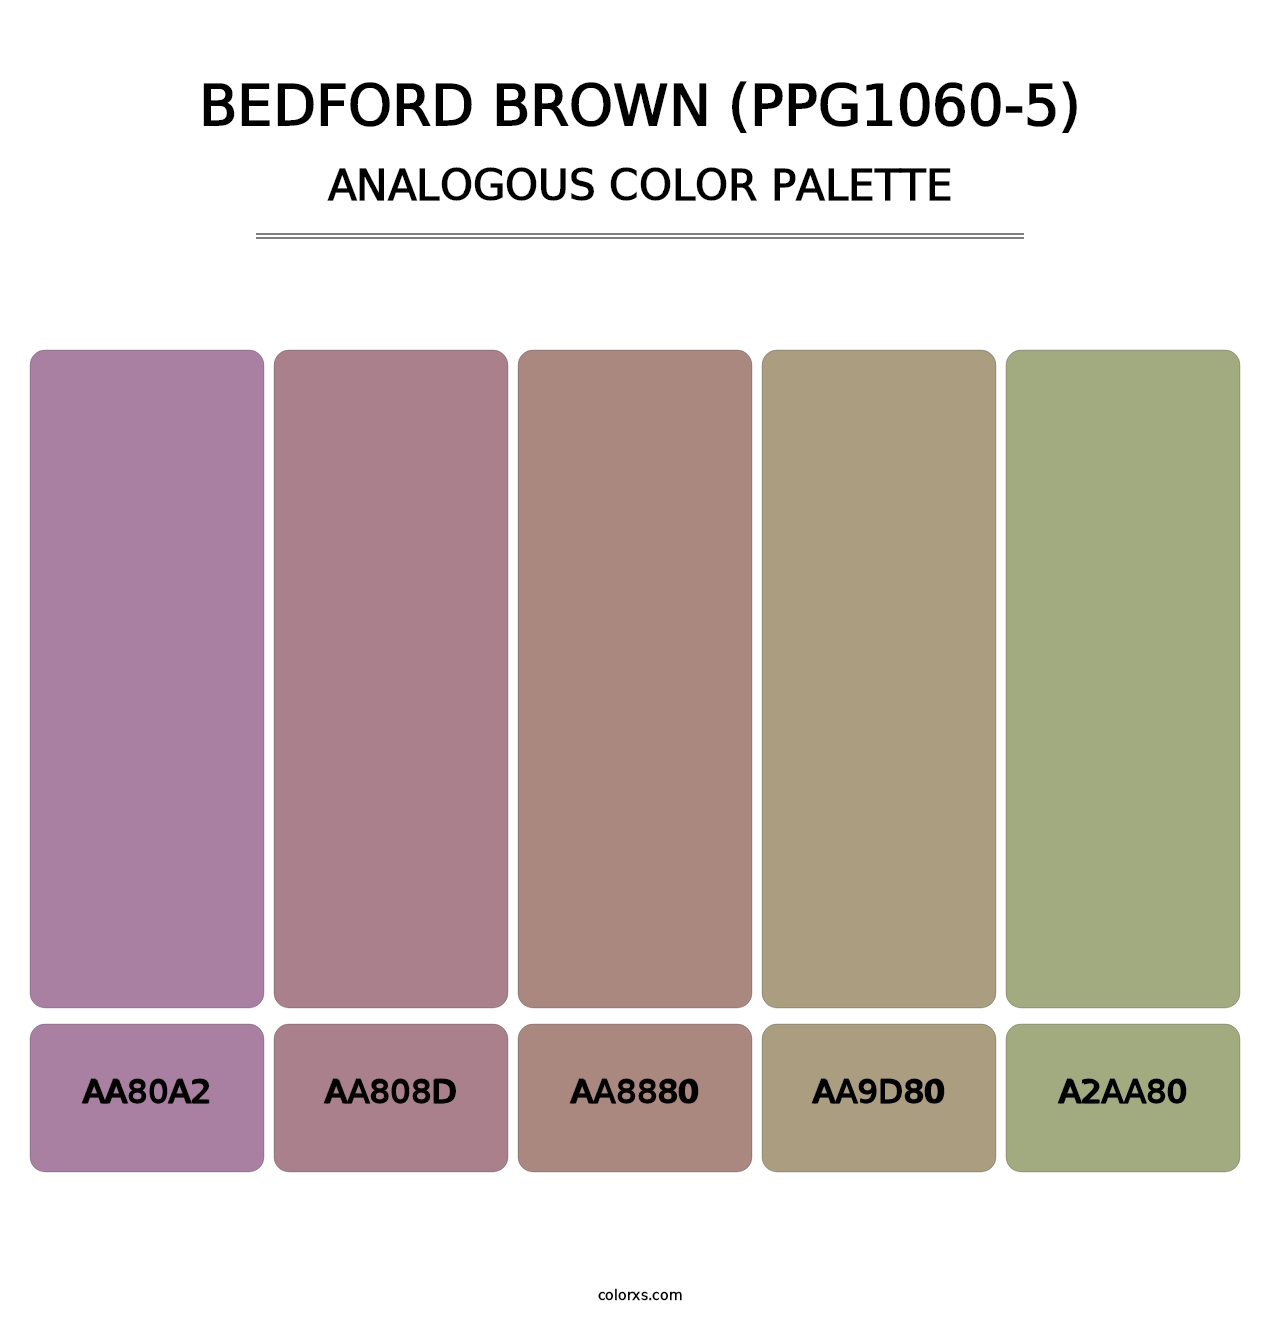 Bedford Brown (PPG1060-5) - Analogous Color Palette